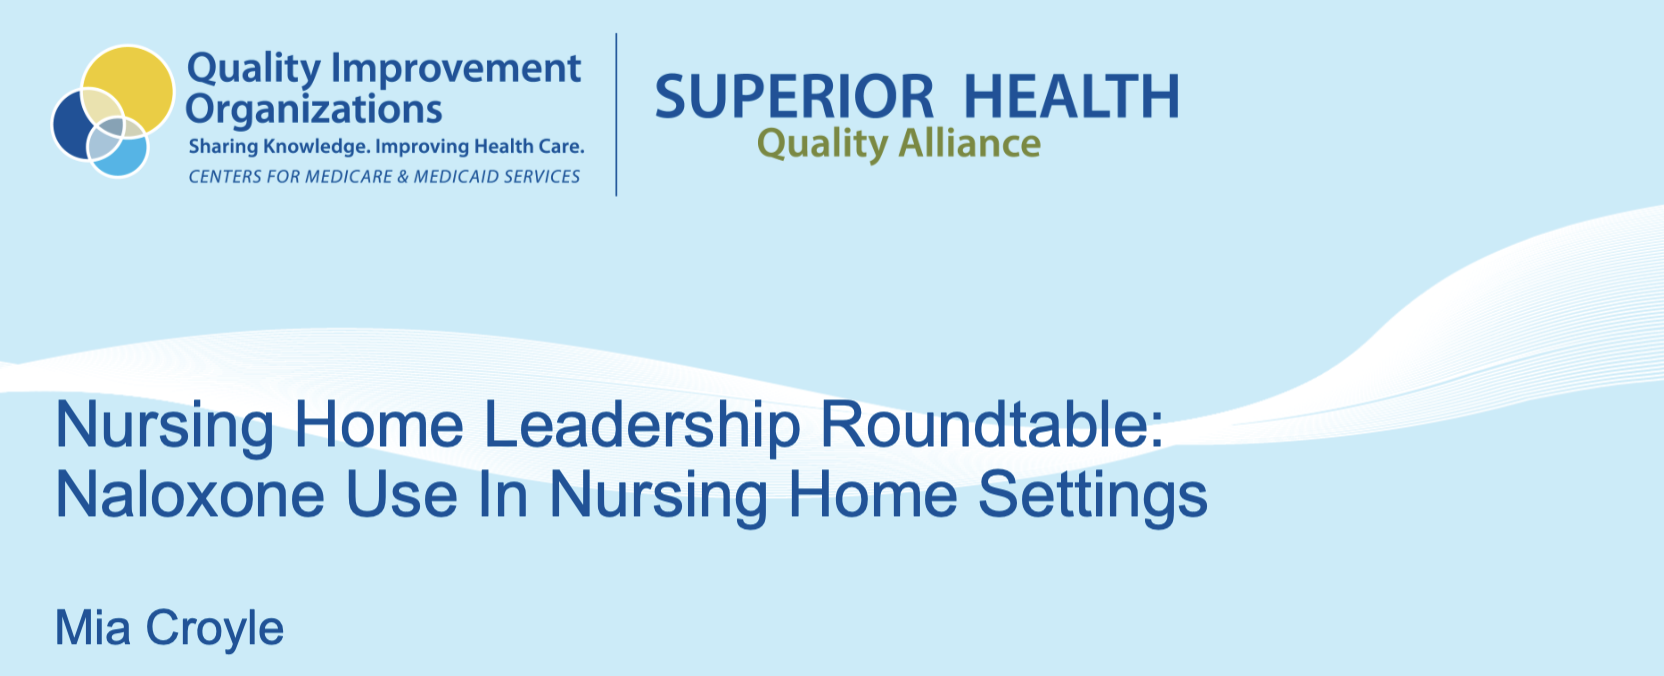 Nursing Home Leadership Roundtable: Naloxone Use in Nursing Home Settings - Mia Coyle